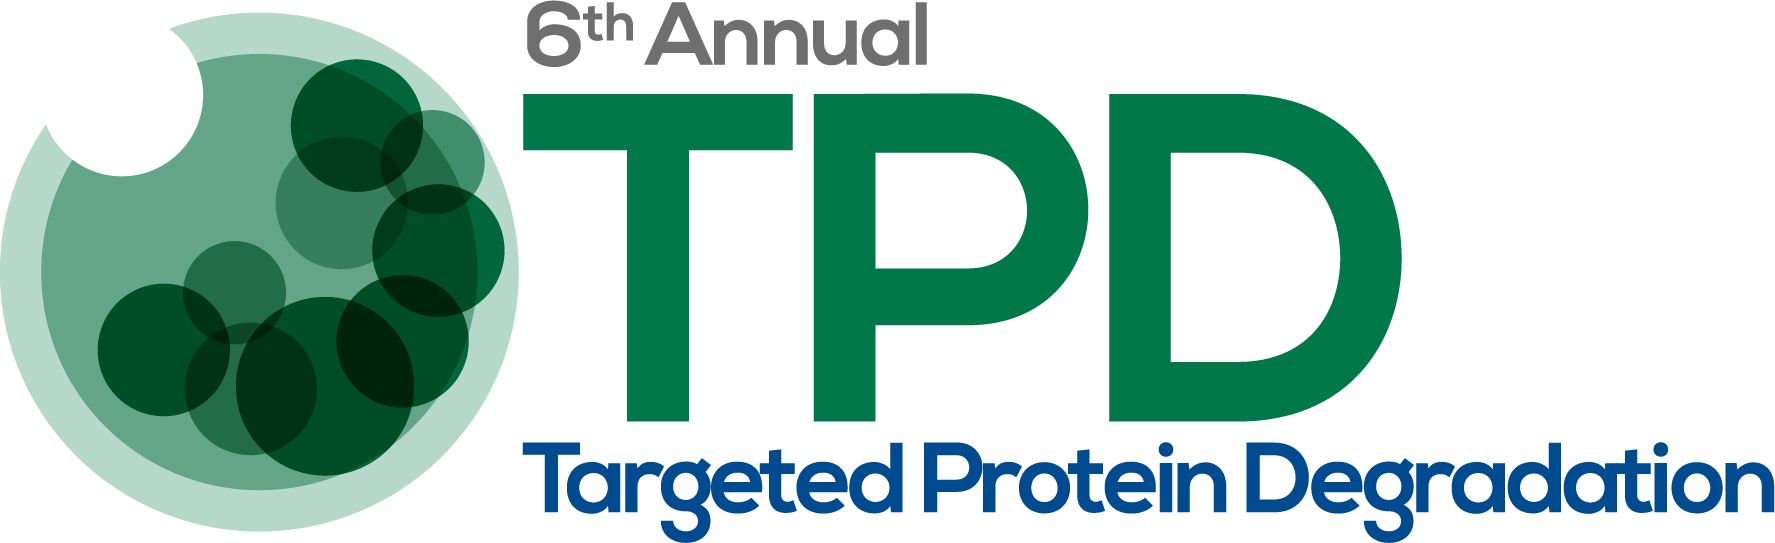 6th Targeted Protein Degradation Summit Logo